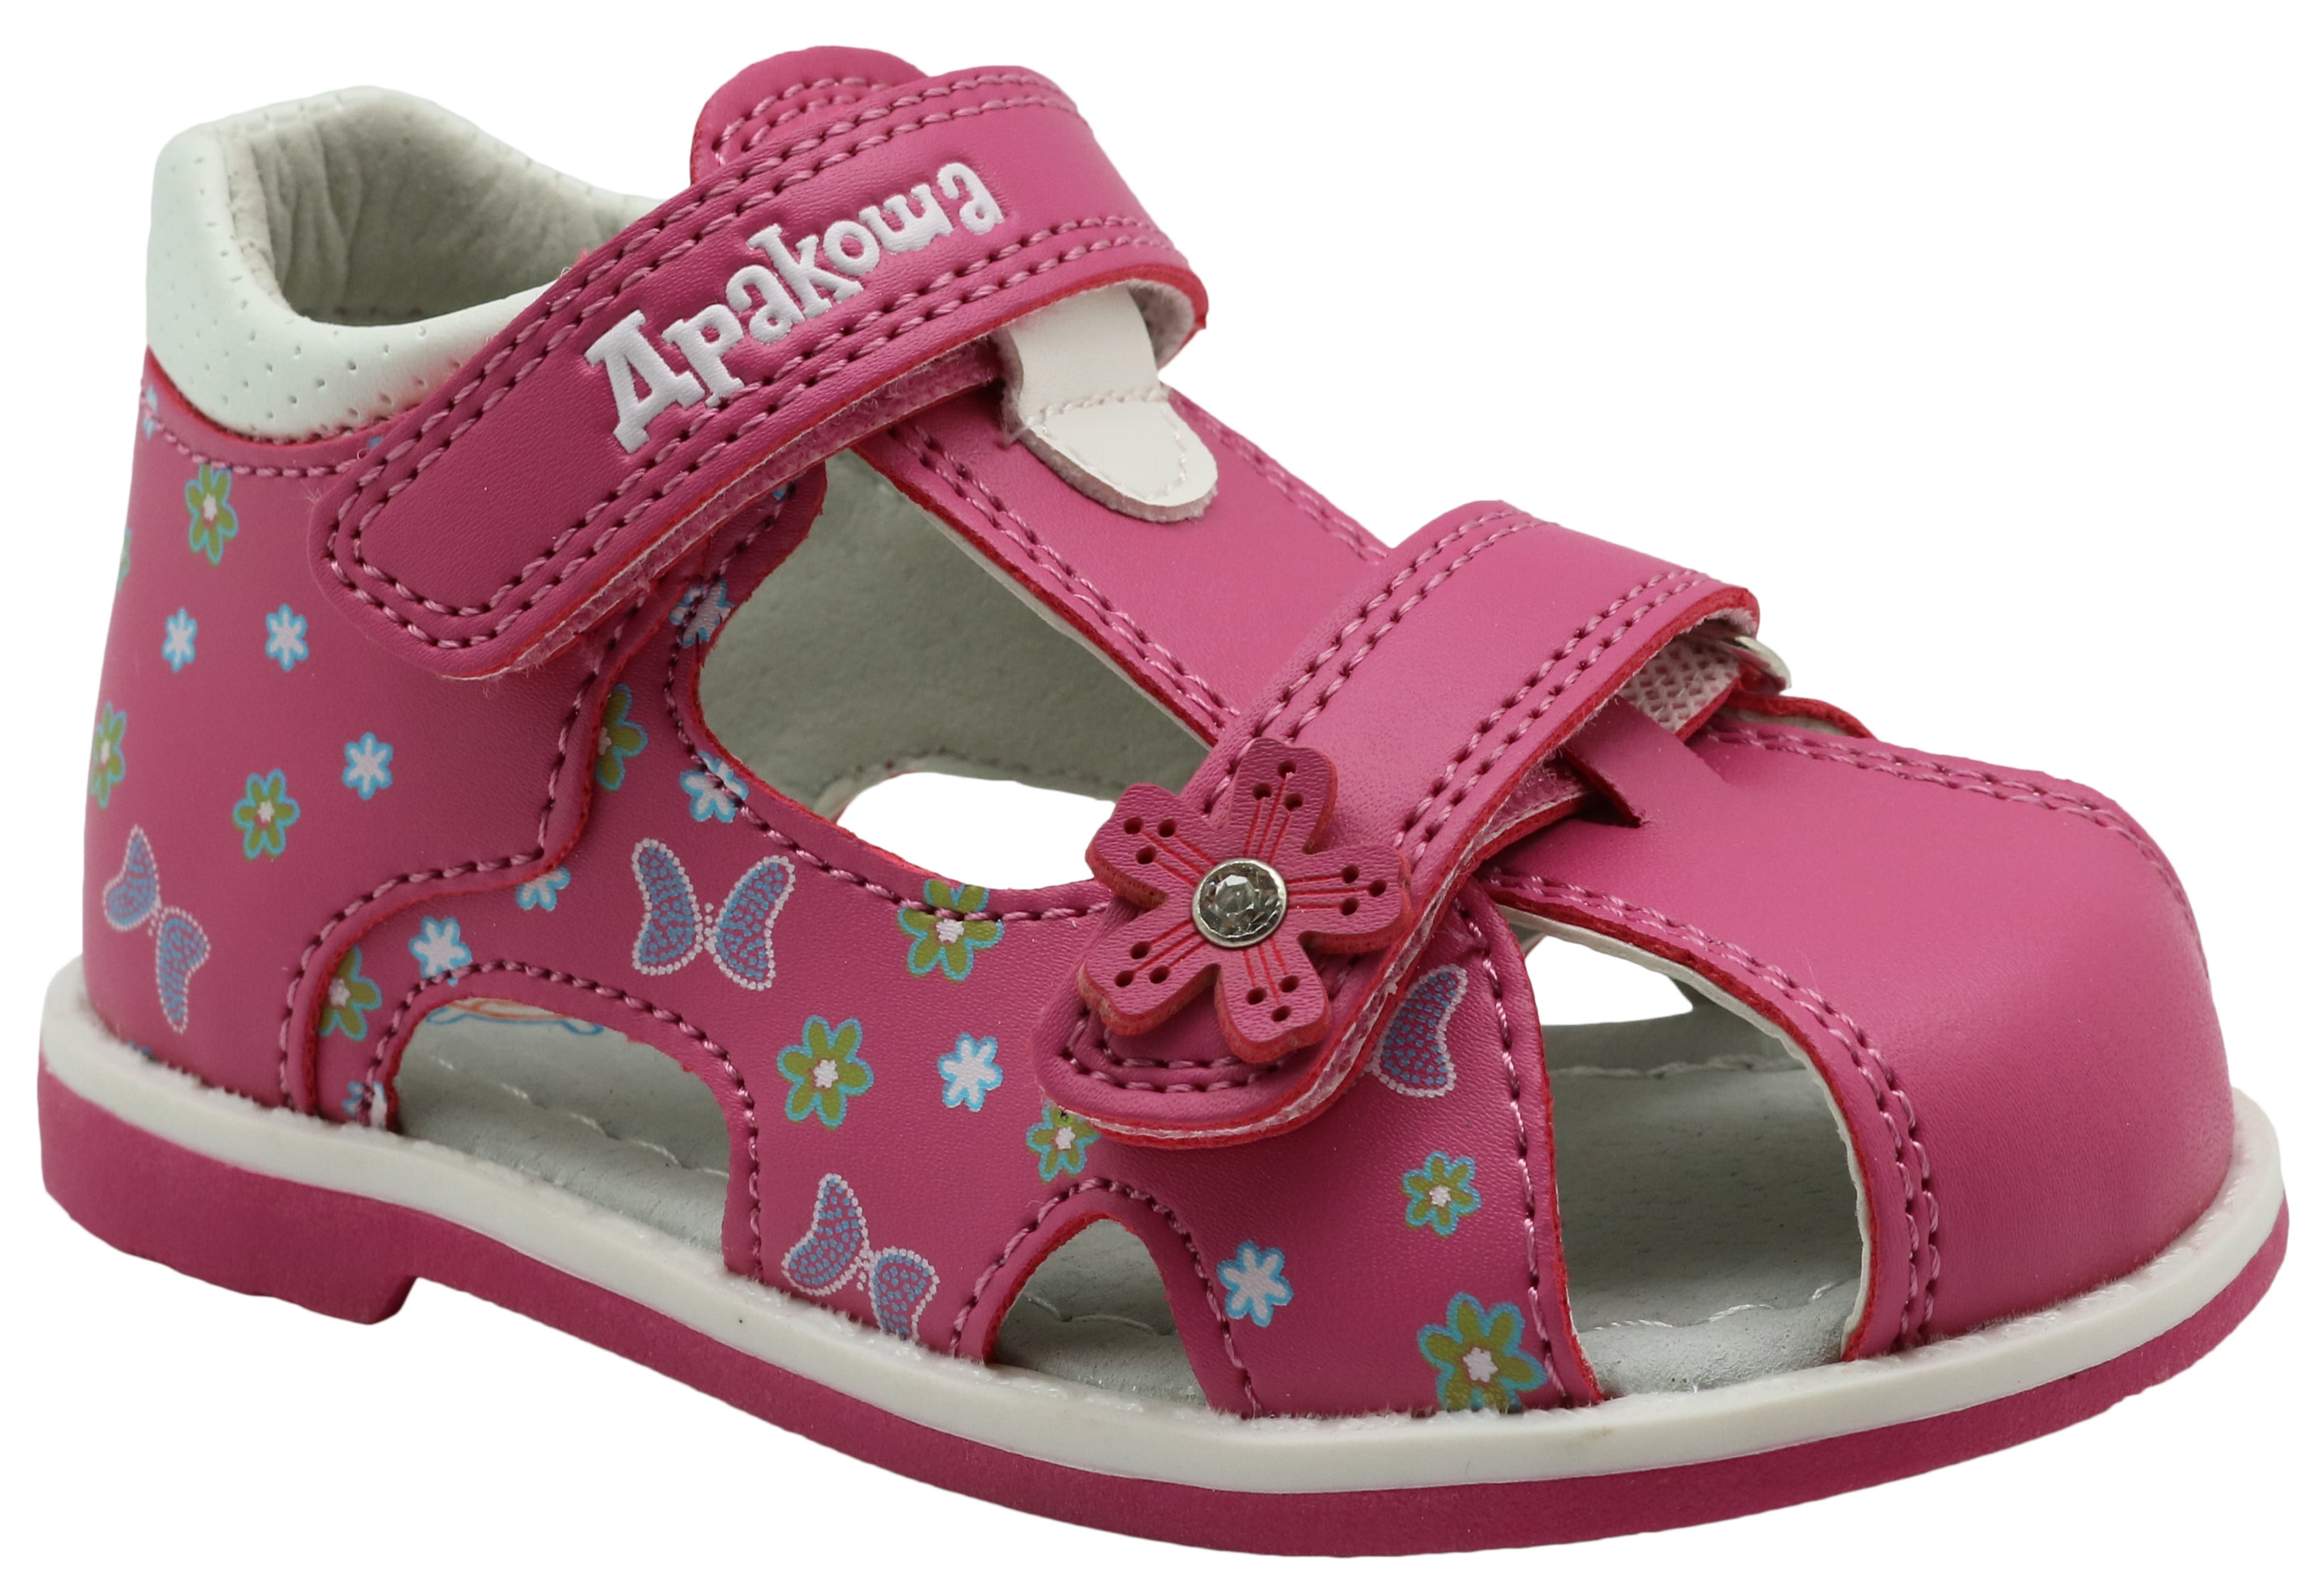 Toddler/Little Kid/Big Apakowa Boys Double Adjustable Strap Closed-Toe Leather Sandals 